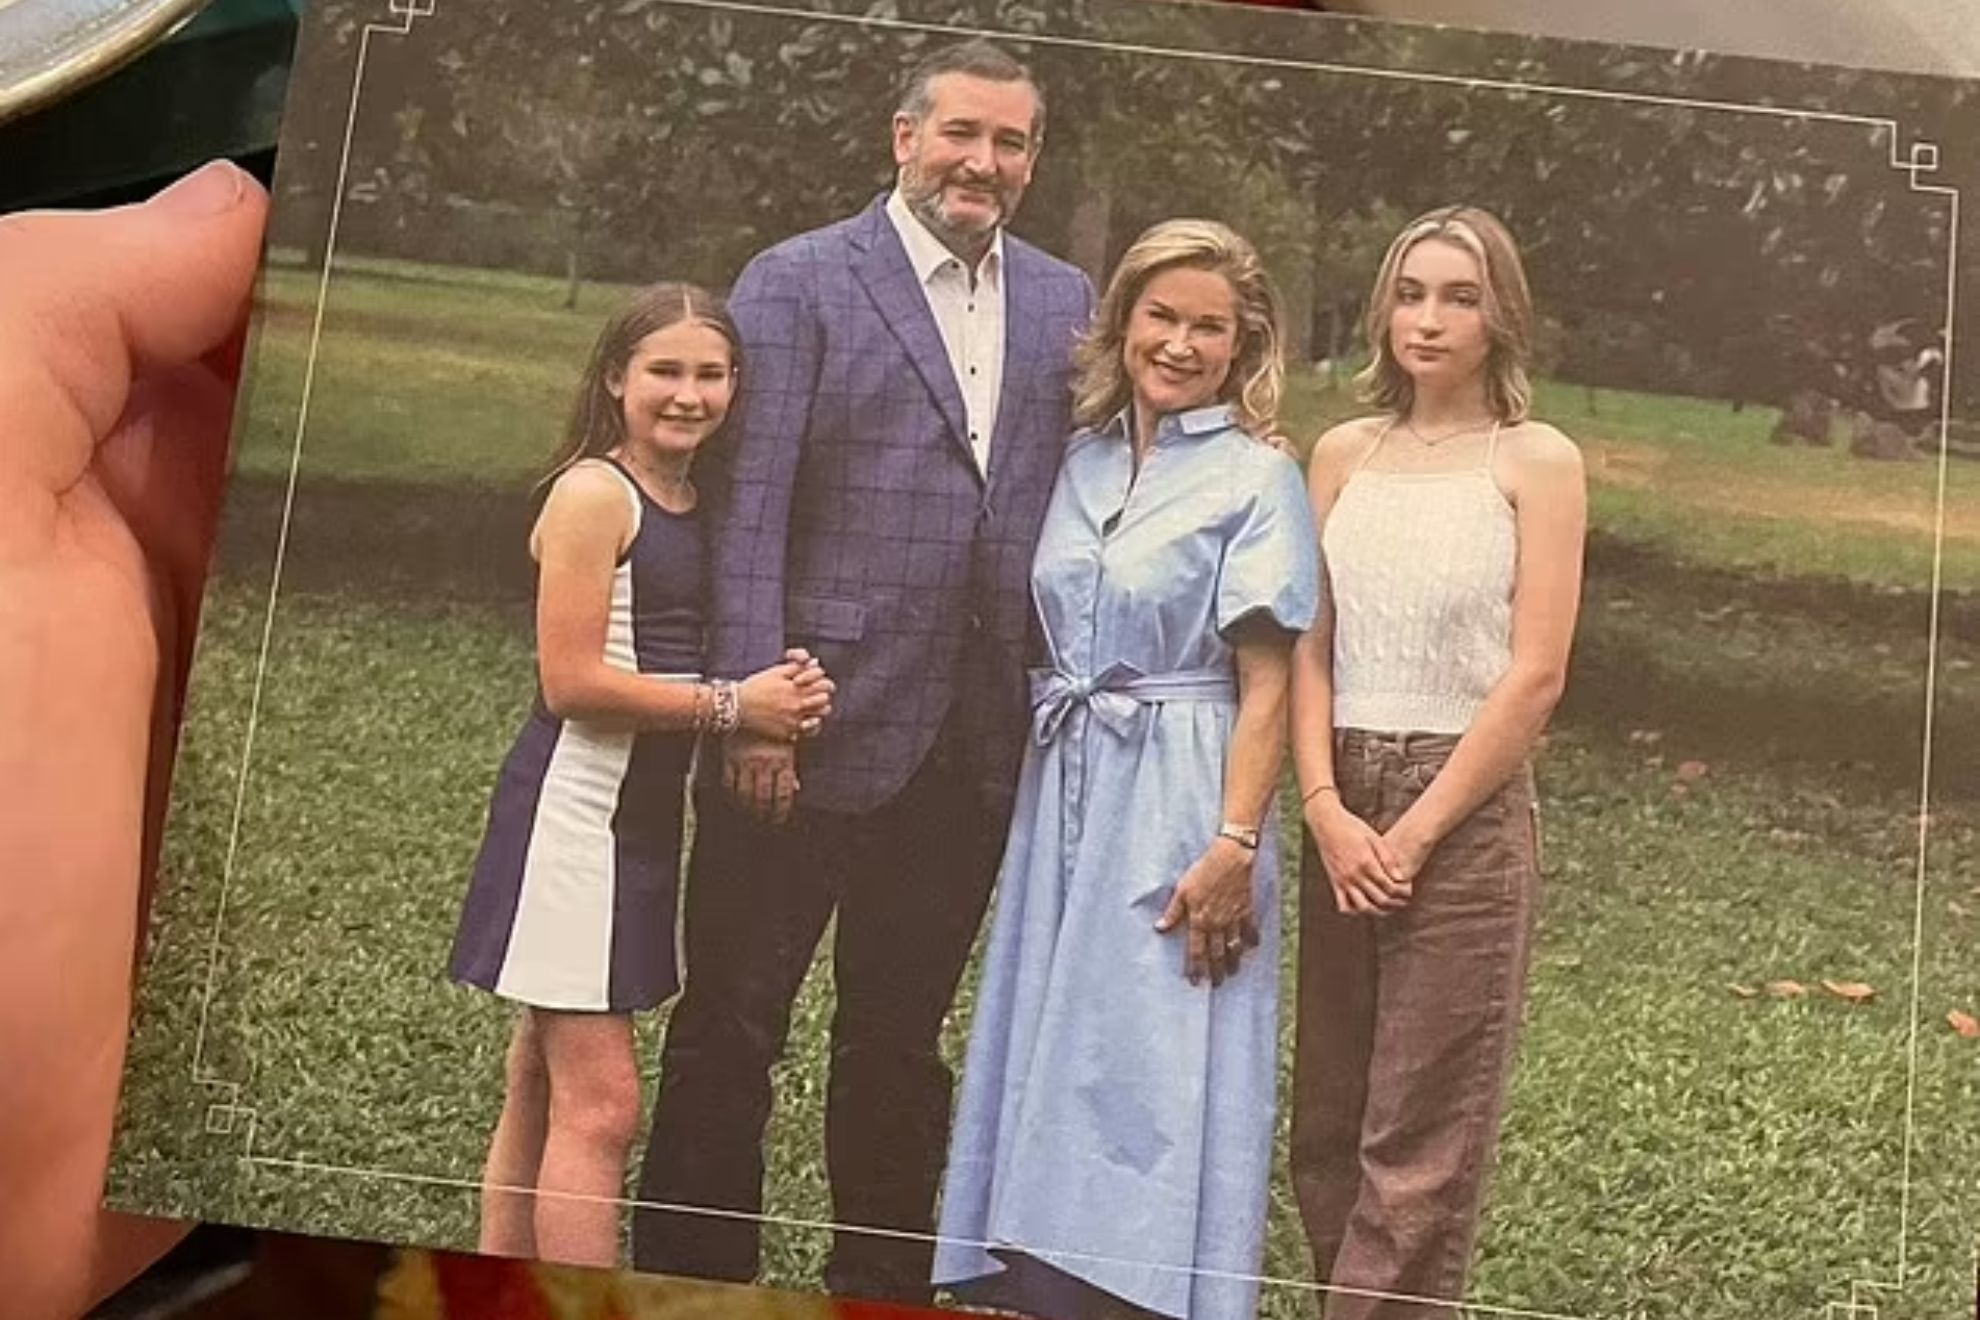 The Cruz family Christmas card, as shared by Caroline (right).